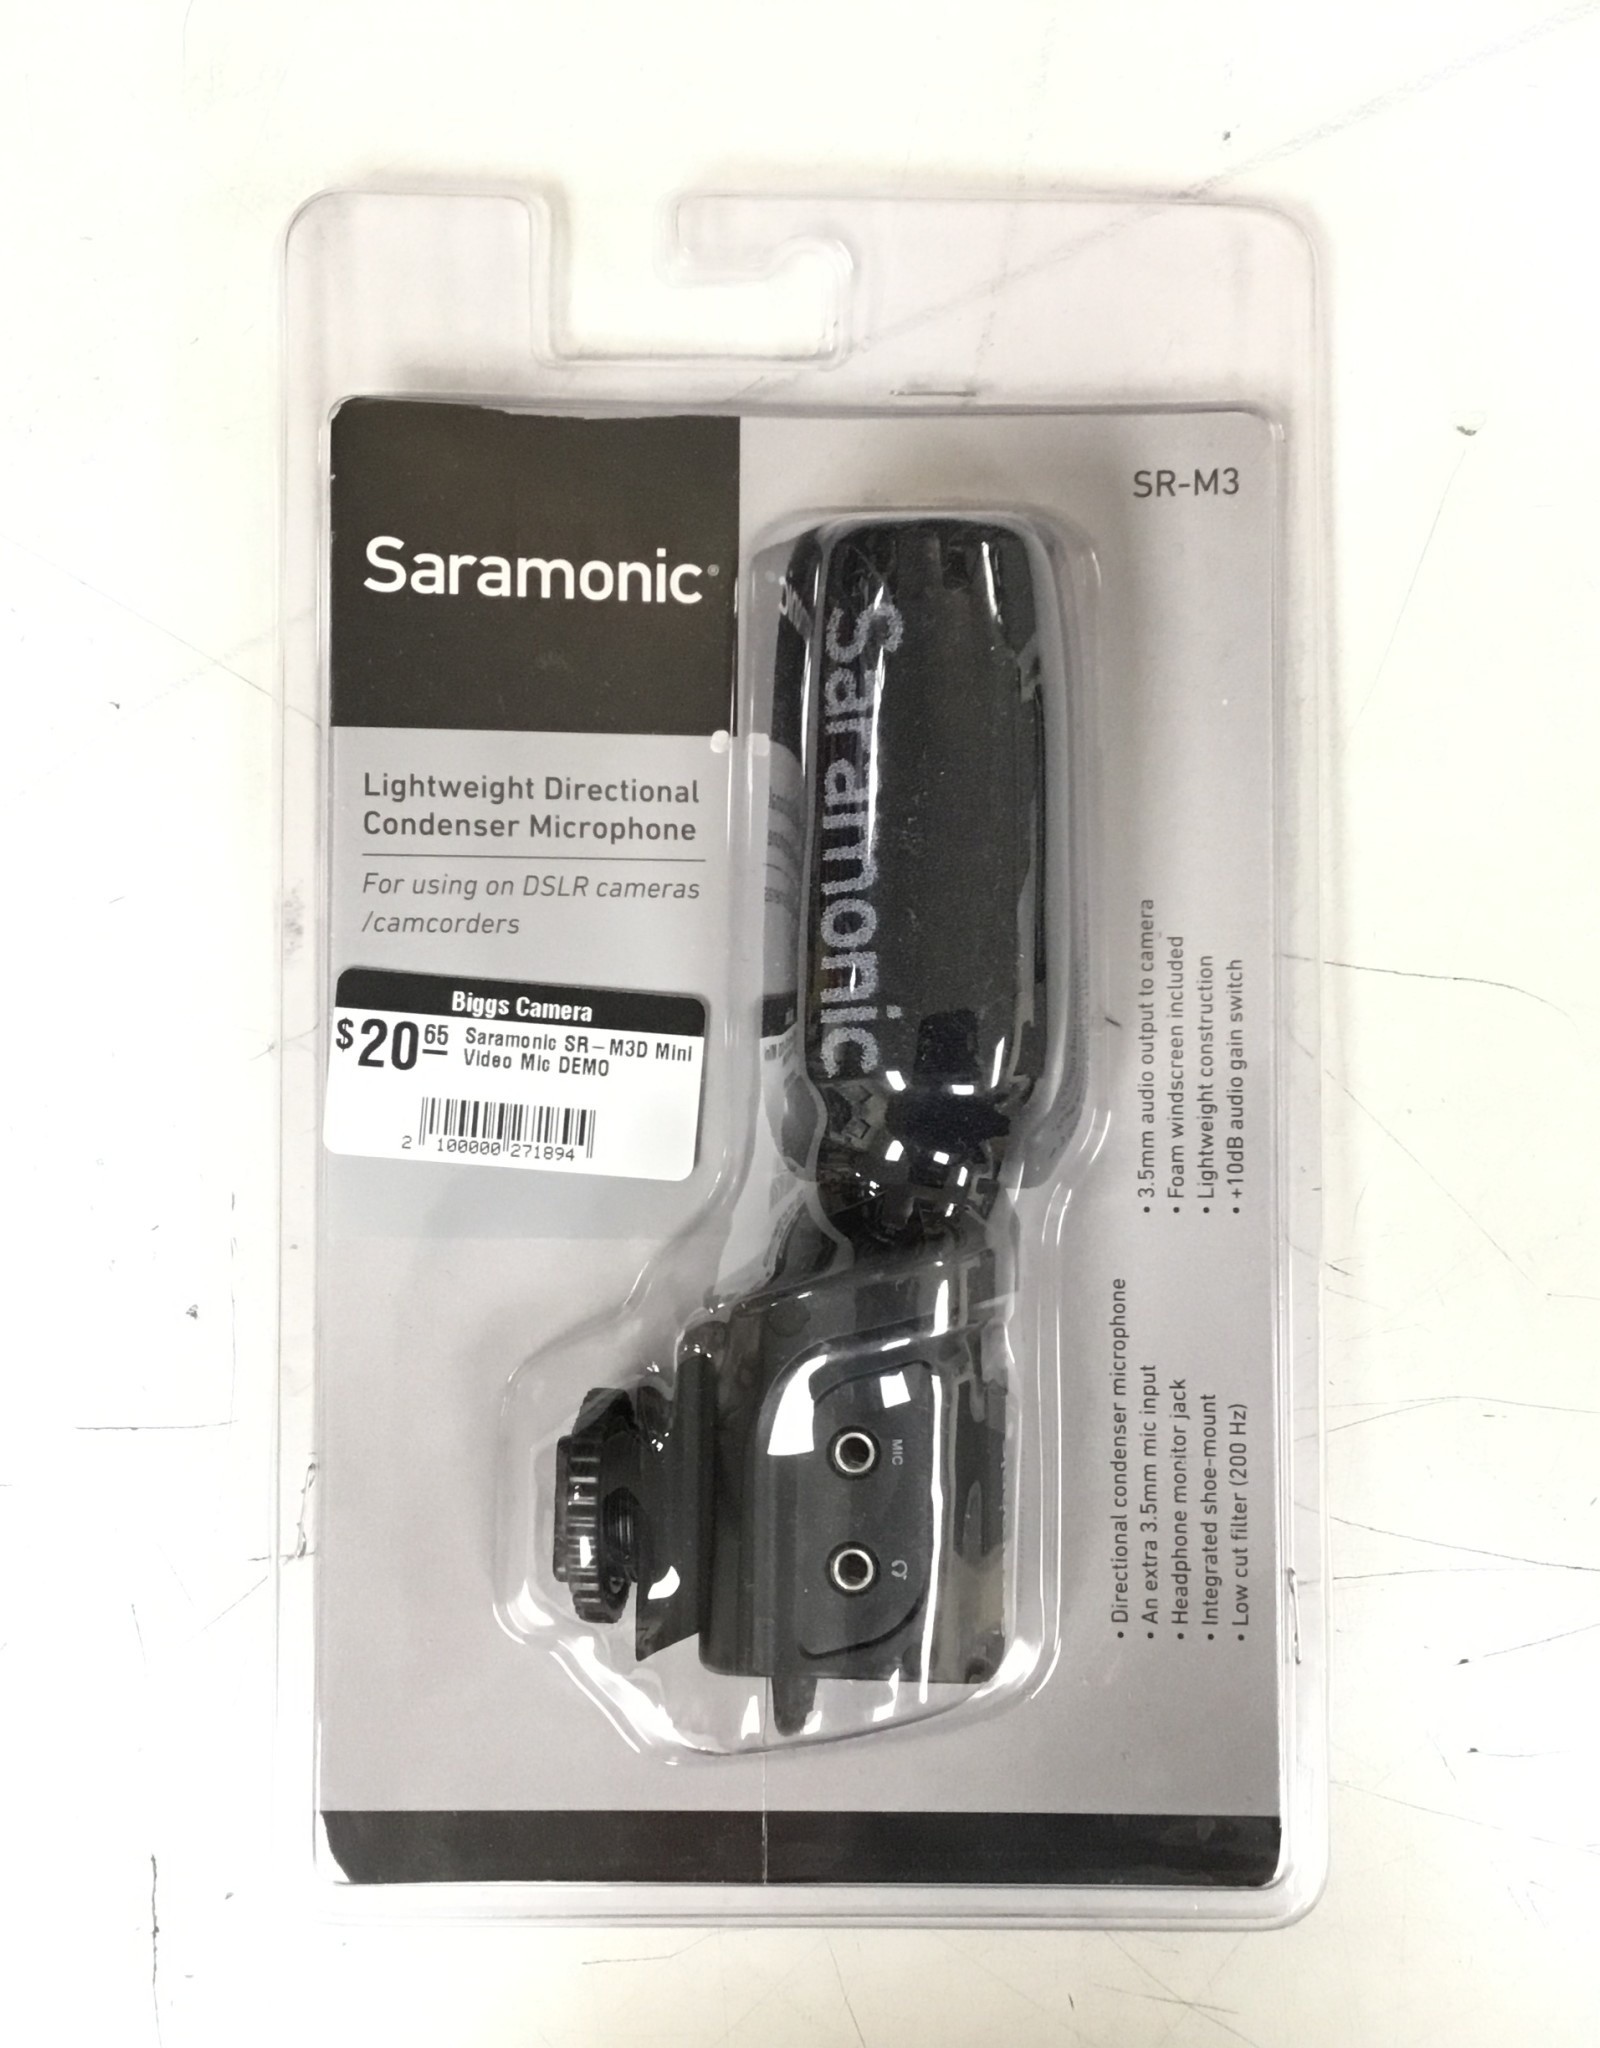 Saramonic SR-M3D Mini Video Mic DEMO